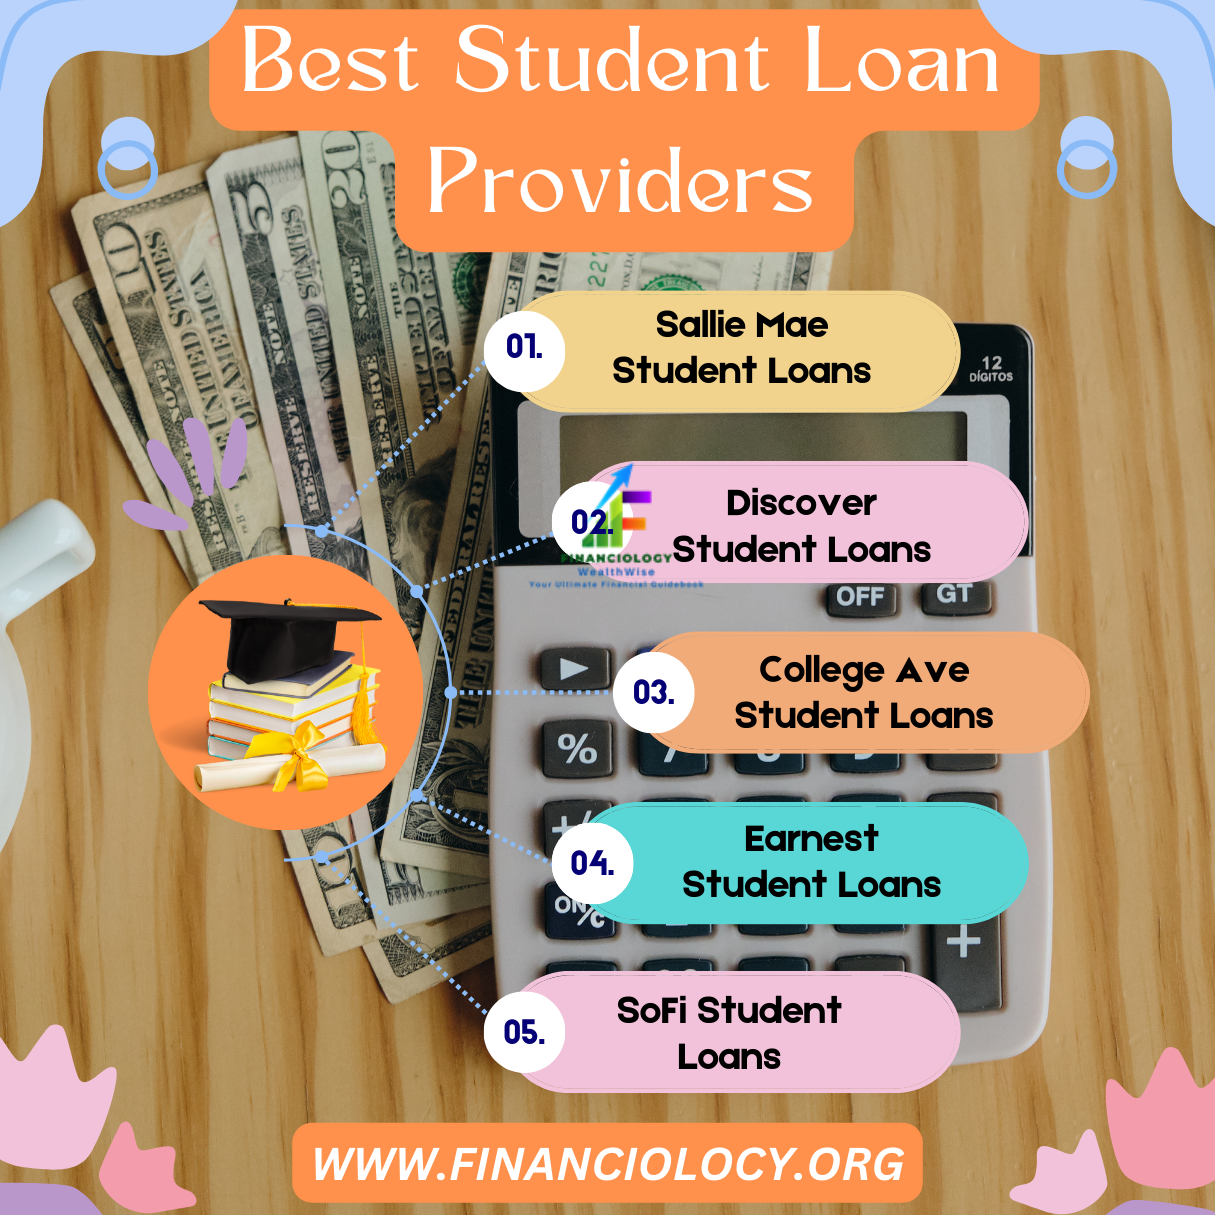 Best Student Loan Providers; Sallie Mae Student Loans; Discover Student Loans; College Ave Student Loans; Earnest Student Loans; SoFi Student Loans; Sallie Mae Student Loans Login